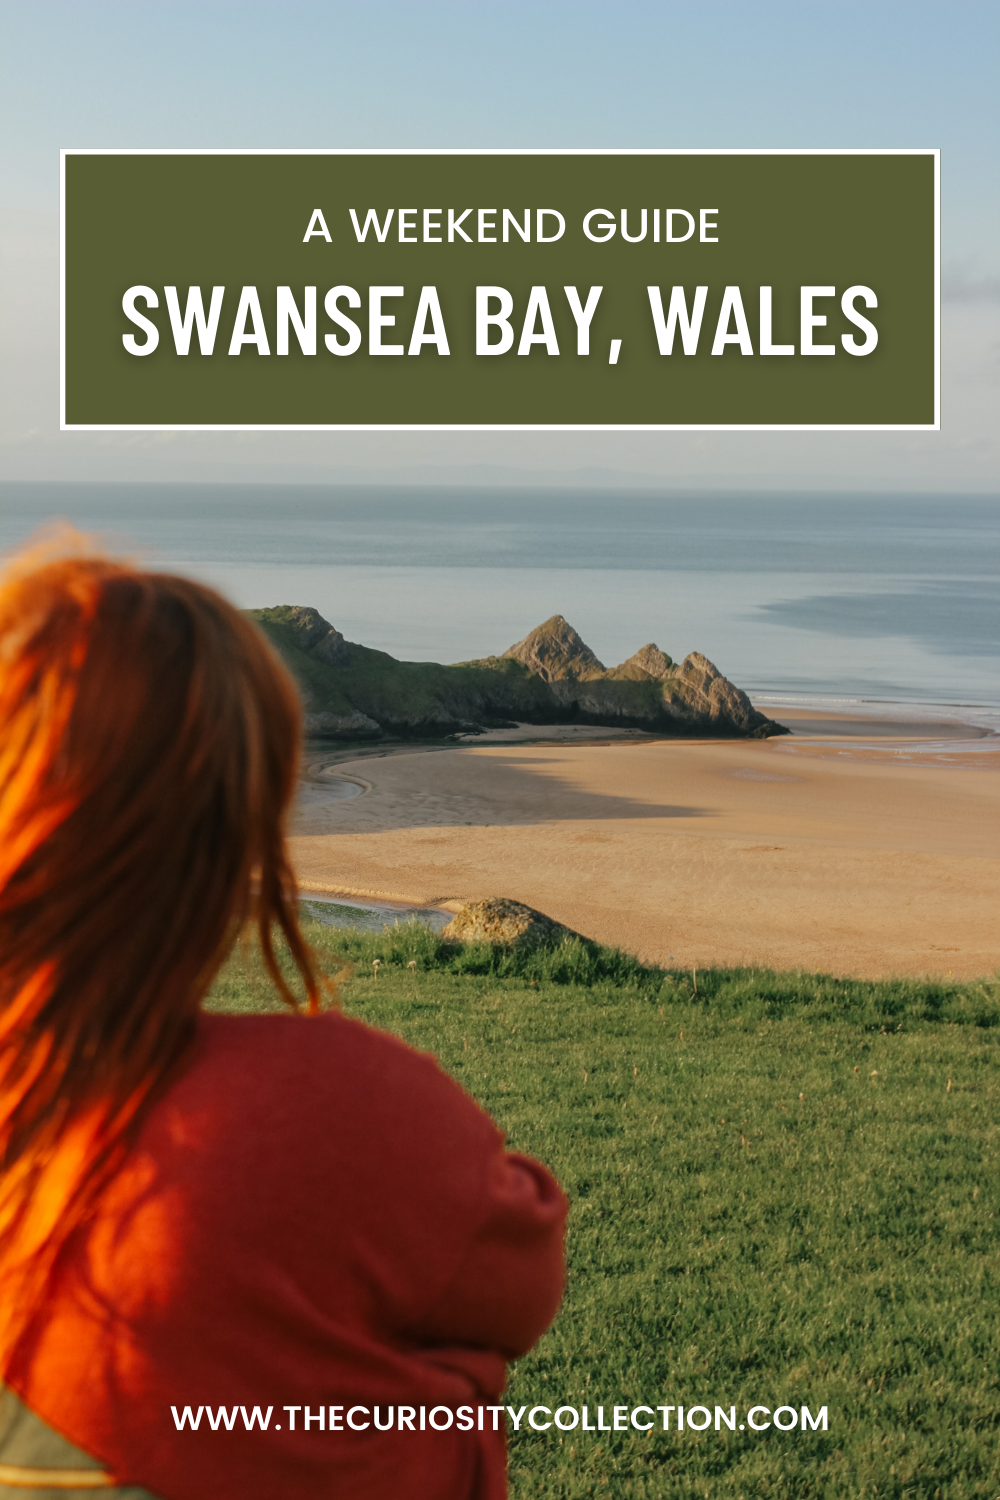 Swansea bay, wales guide.png